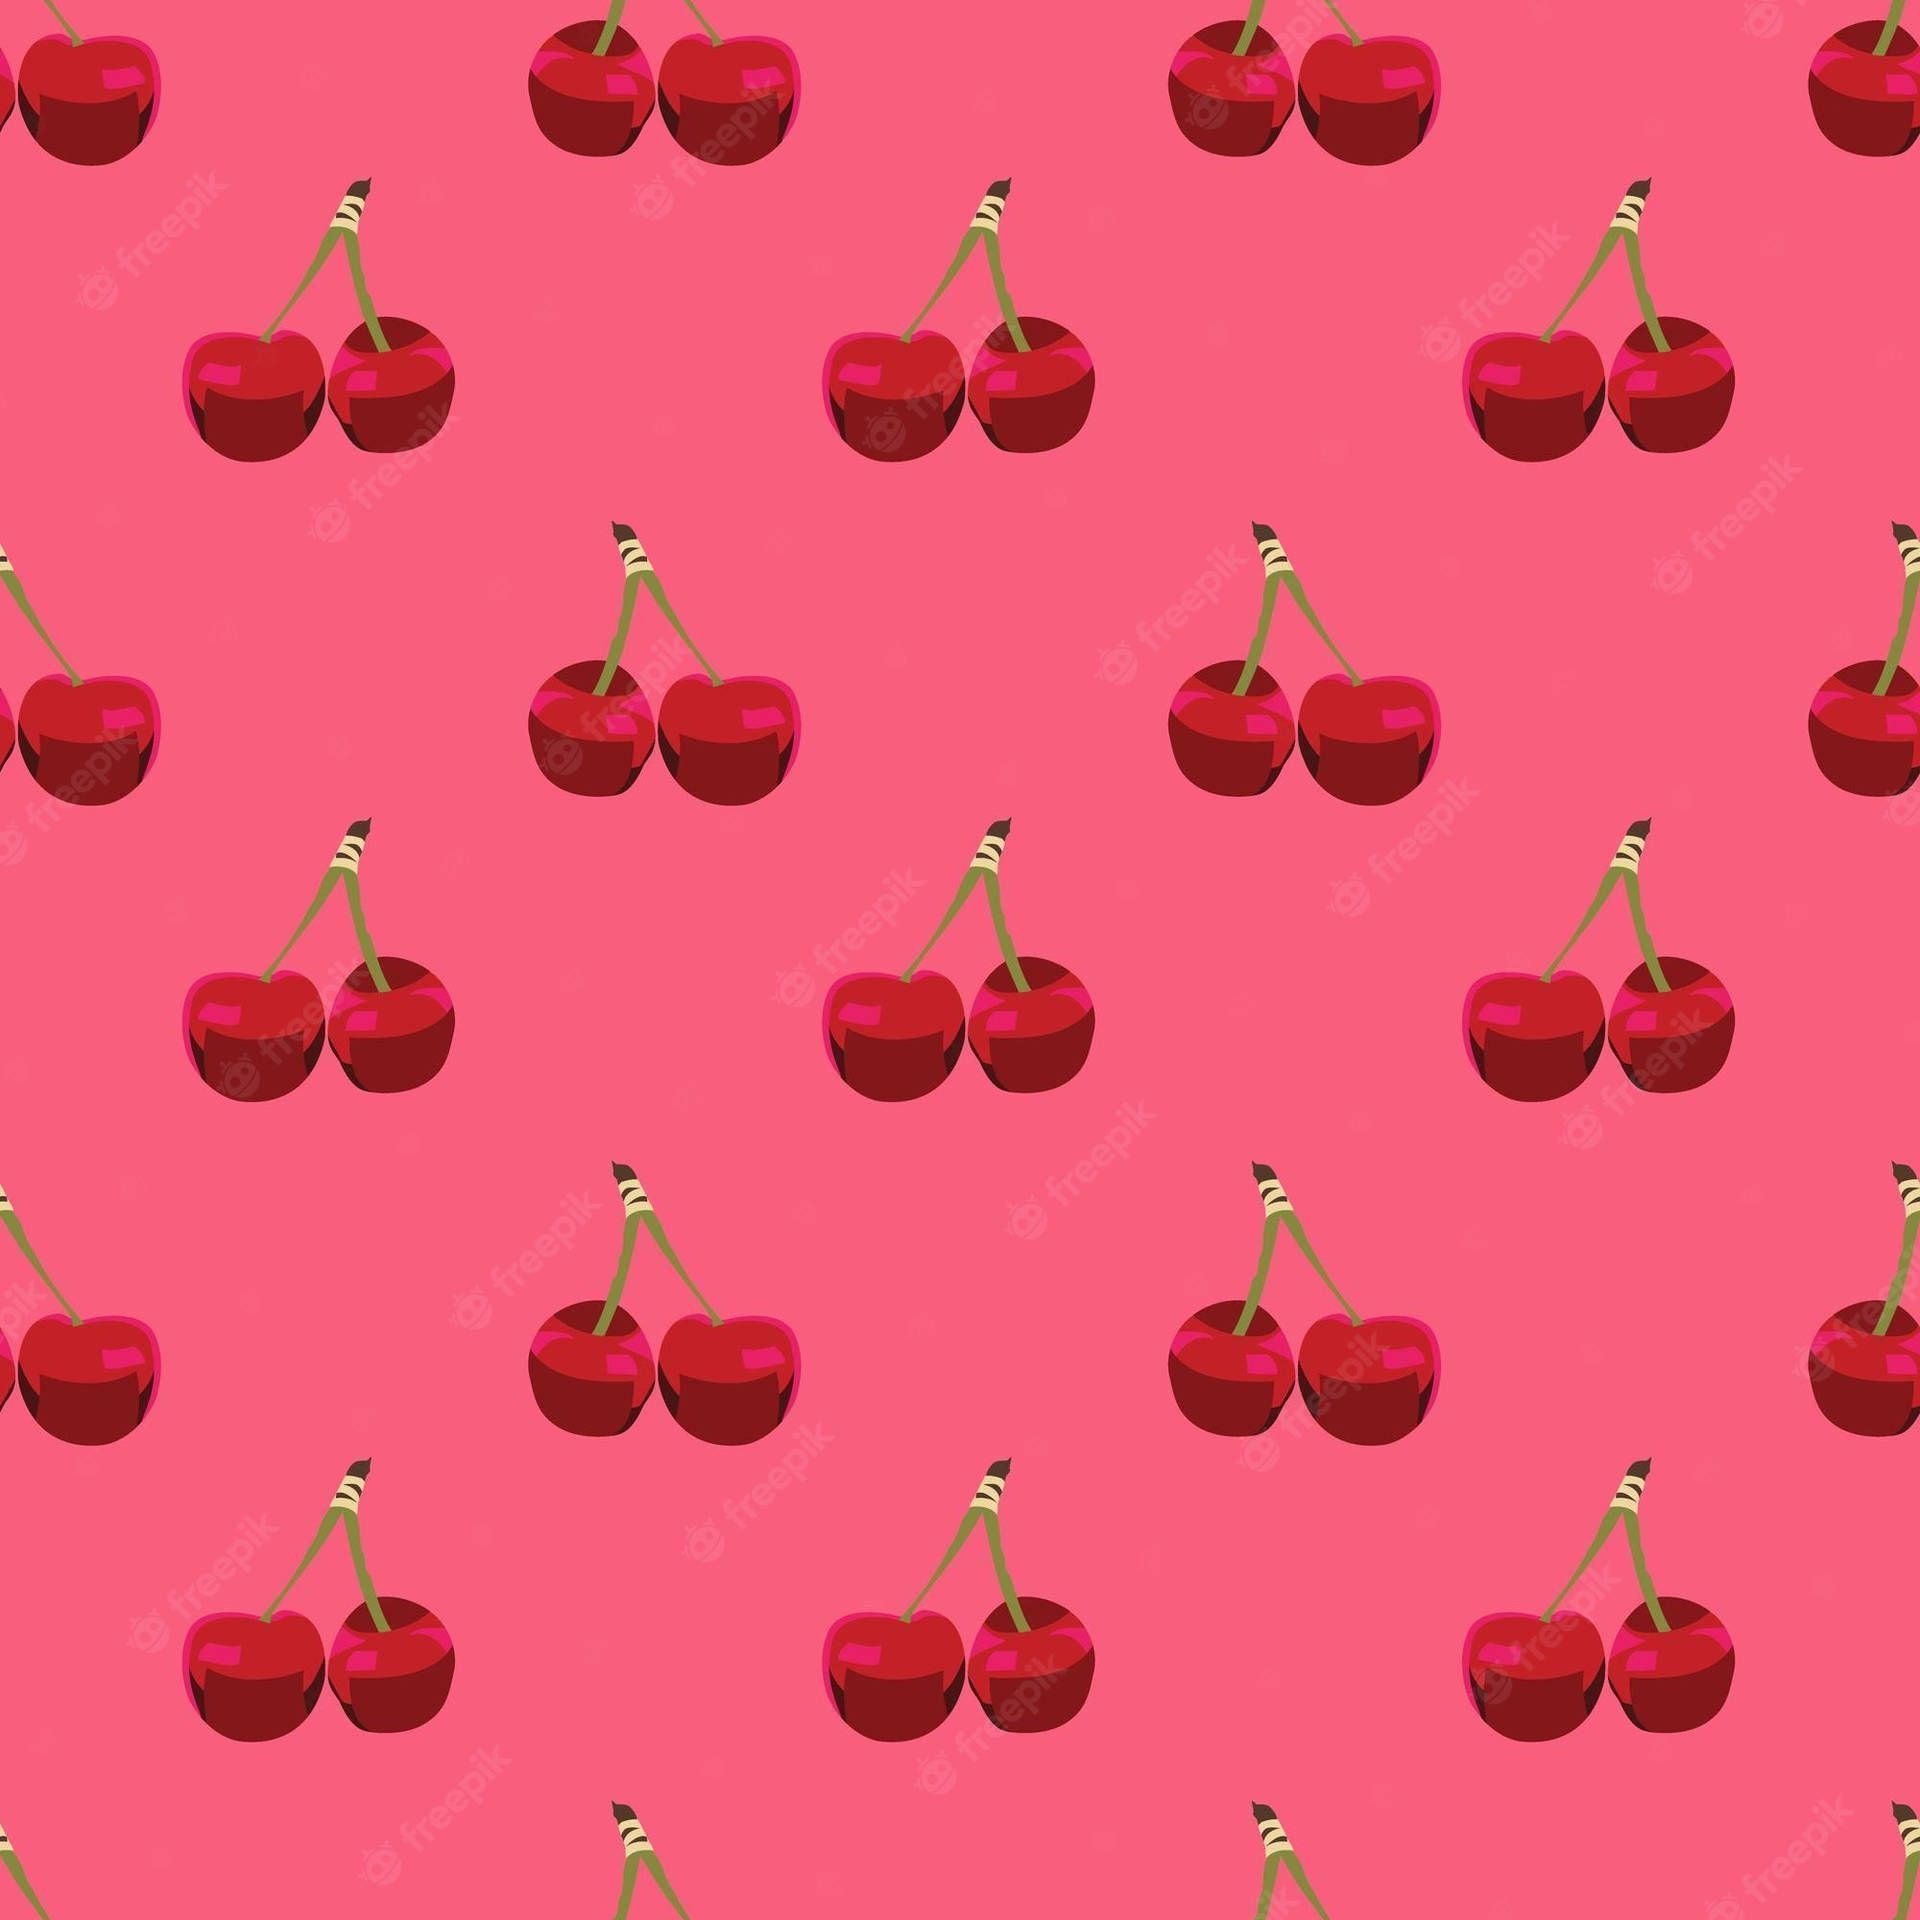 Cherry pattern seamless background - Cherry